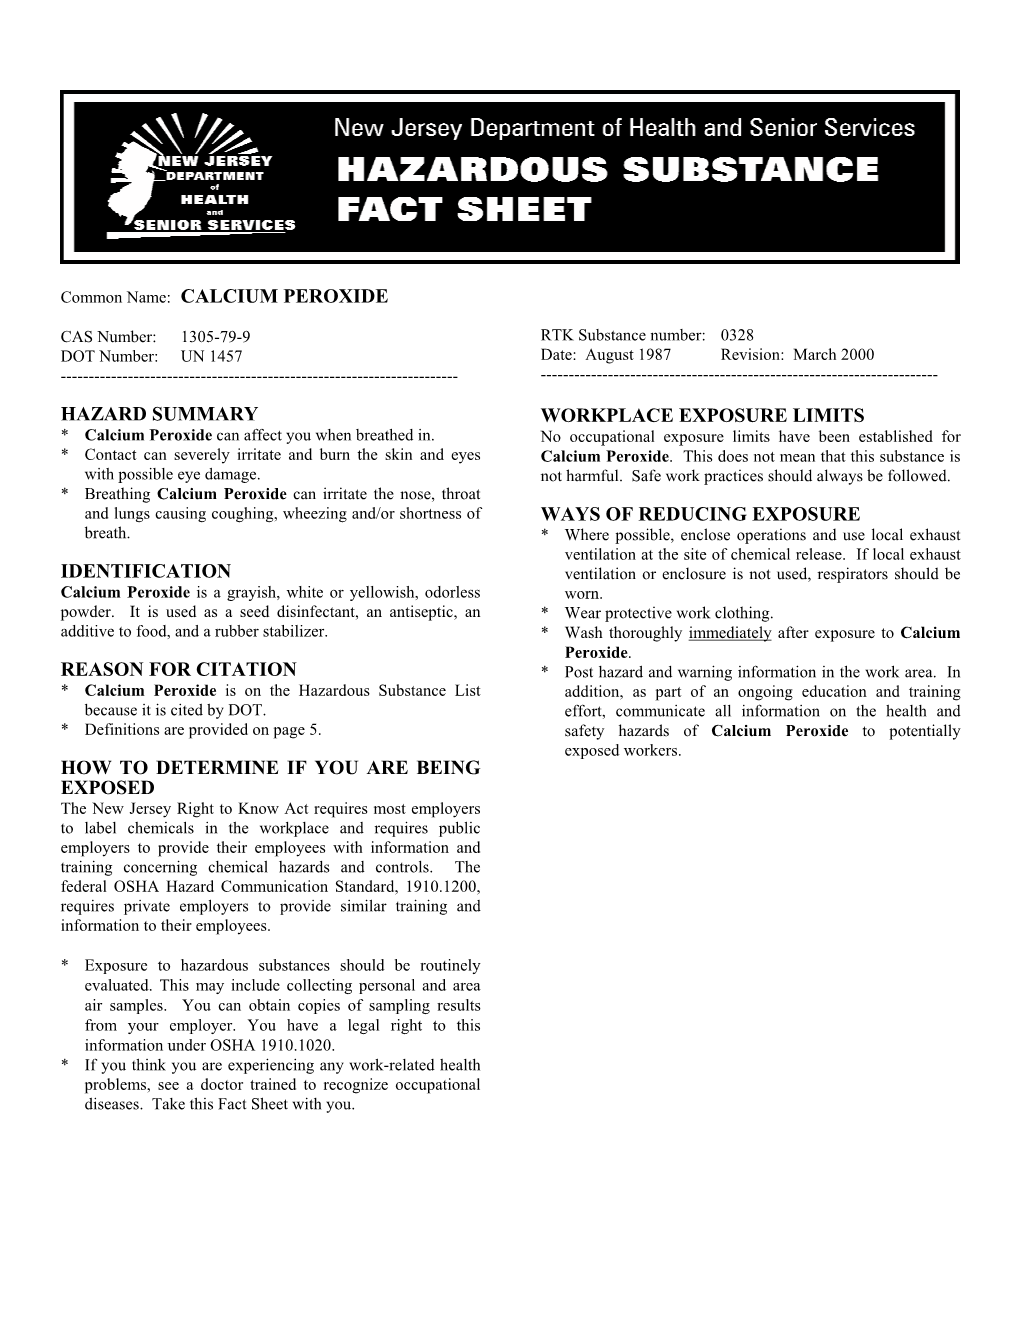 Calcium Peroxide Hazard Summary Identification